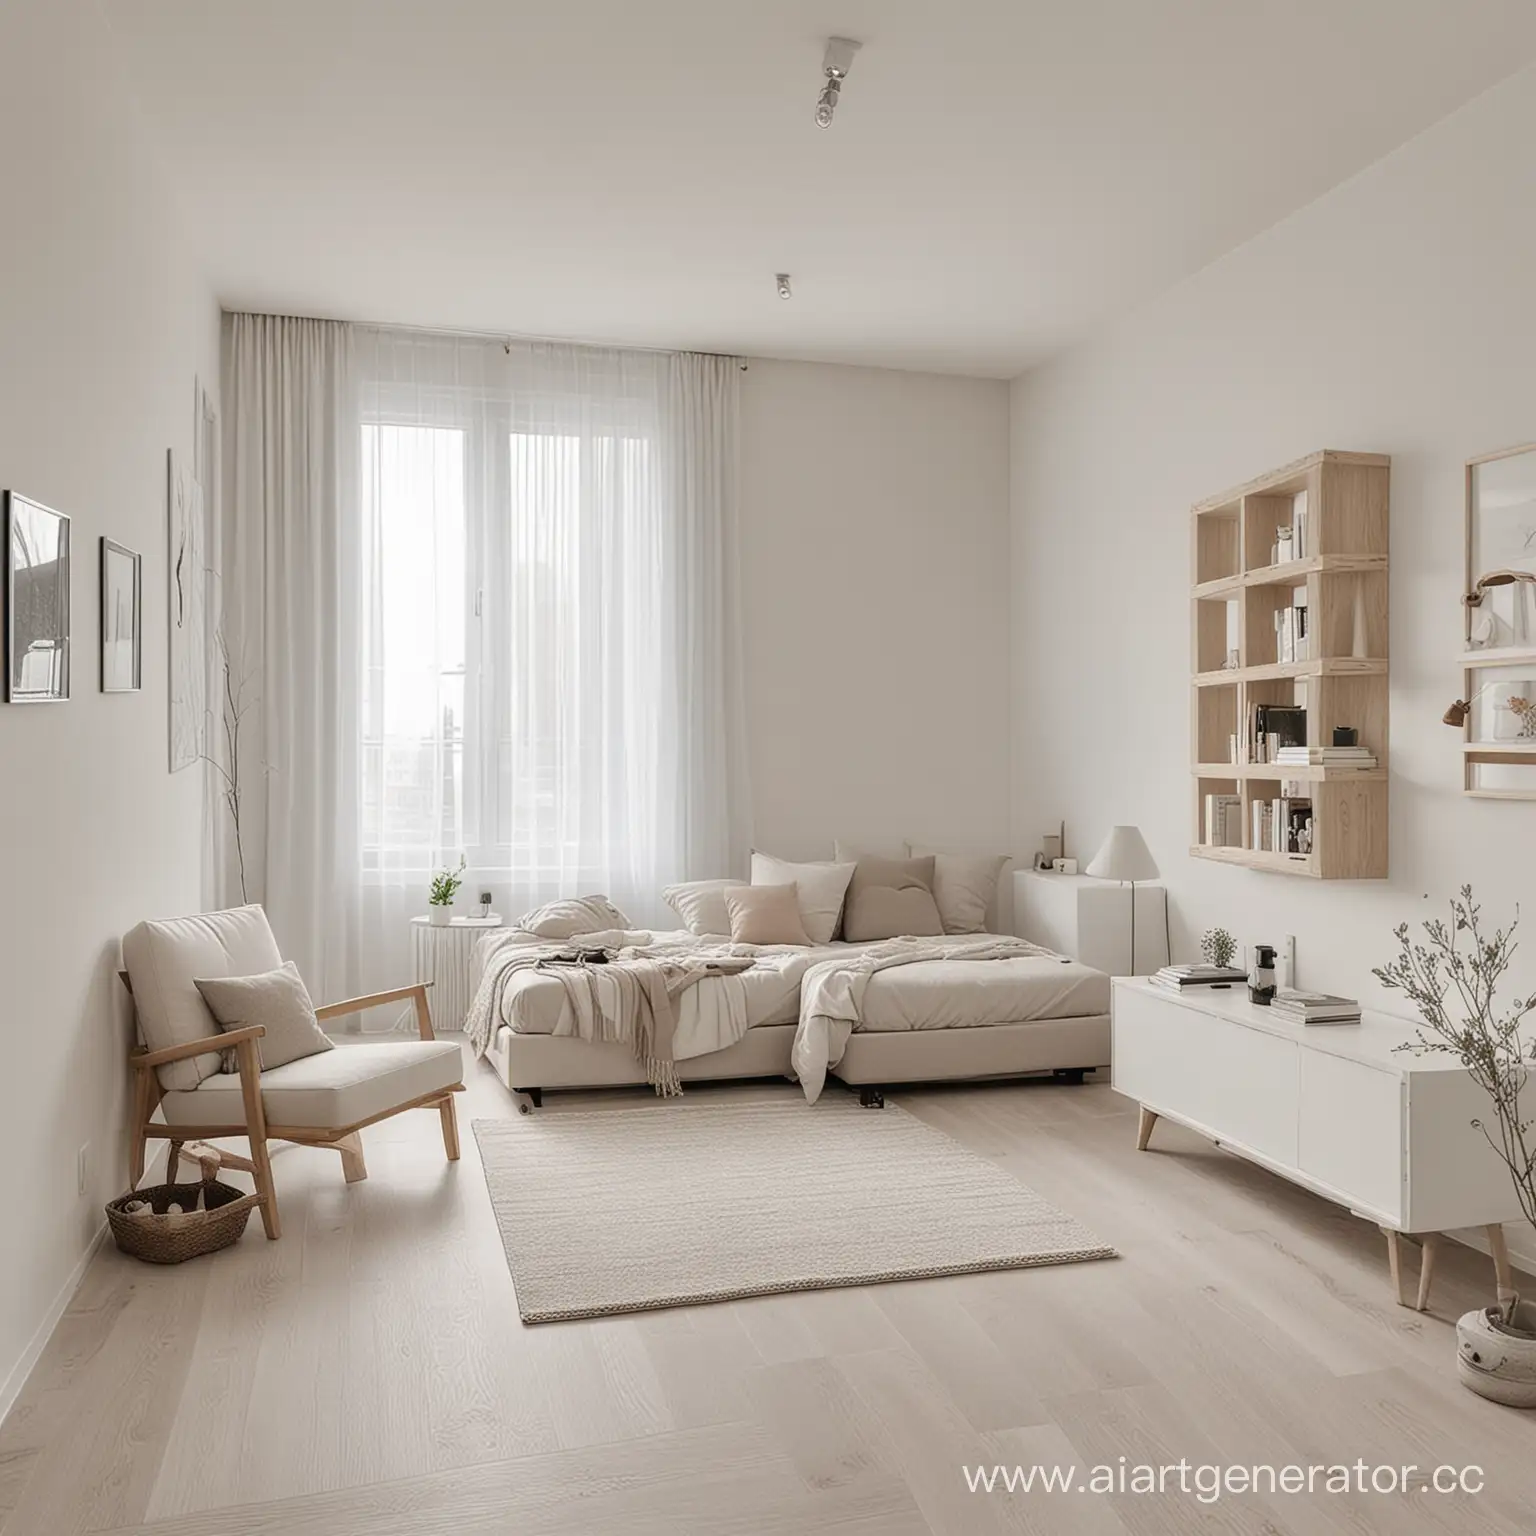 Minimalist-Apartment-Room-with-Light-Tones-and-Subtle-Decor